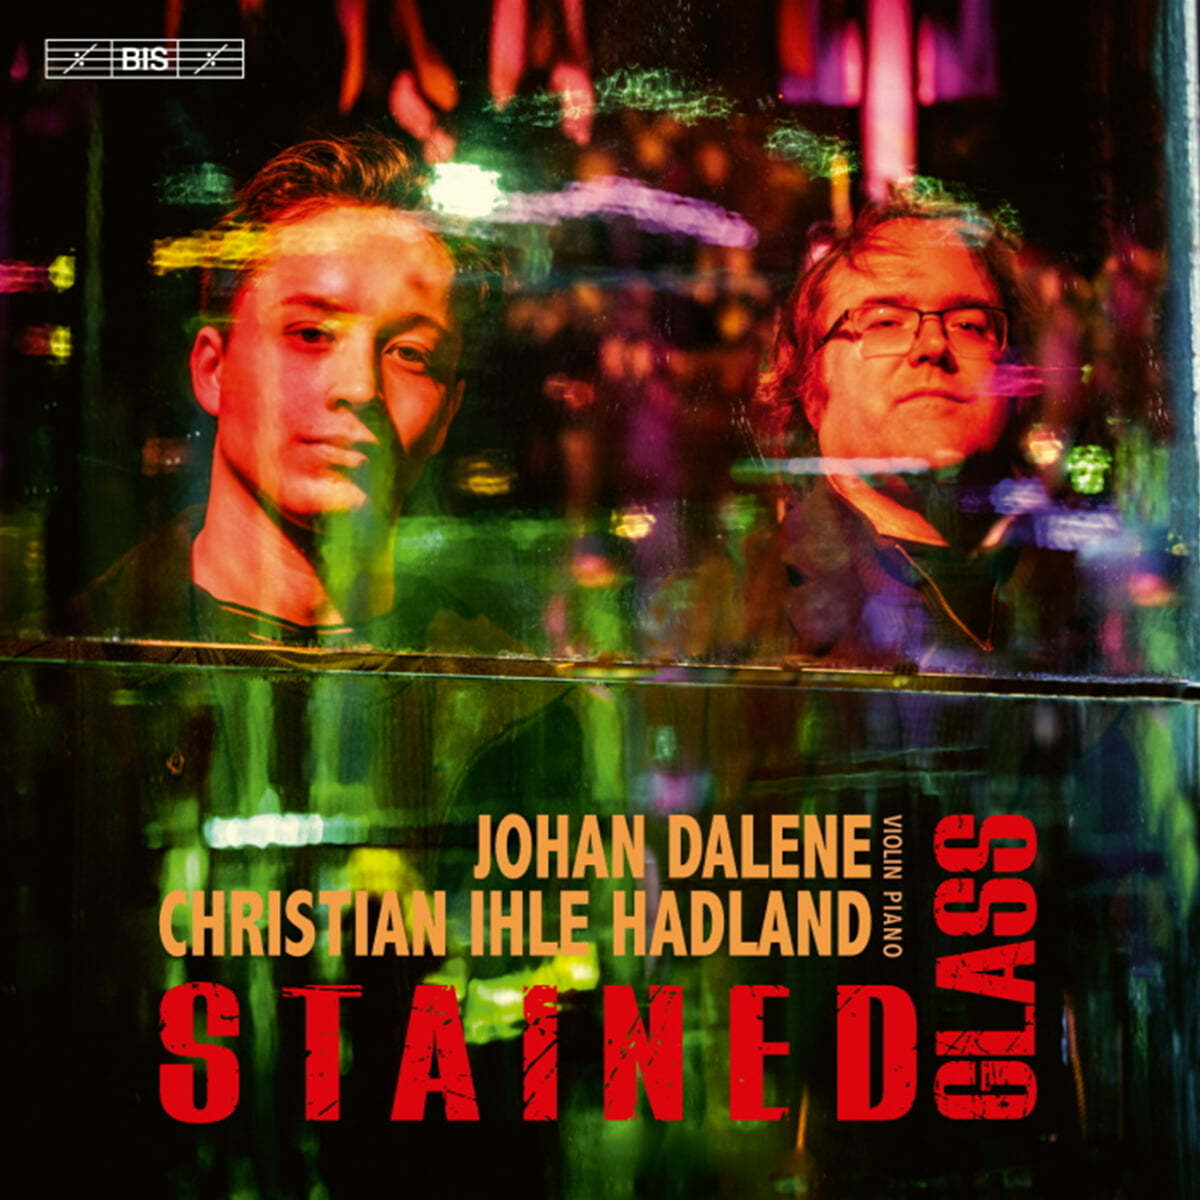 Johan Dalene / Christian Ihle Hadland 스테인드글라스 - 패르트, 라벨, 불랑제, 프로코피예프, 바체비치 (Stained Glass)